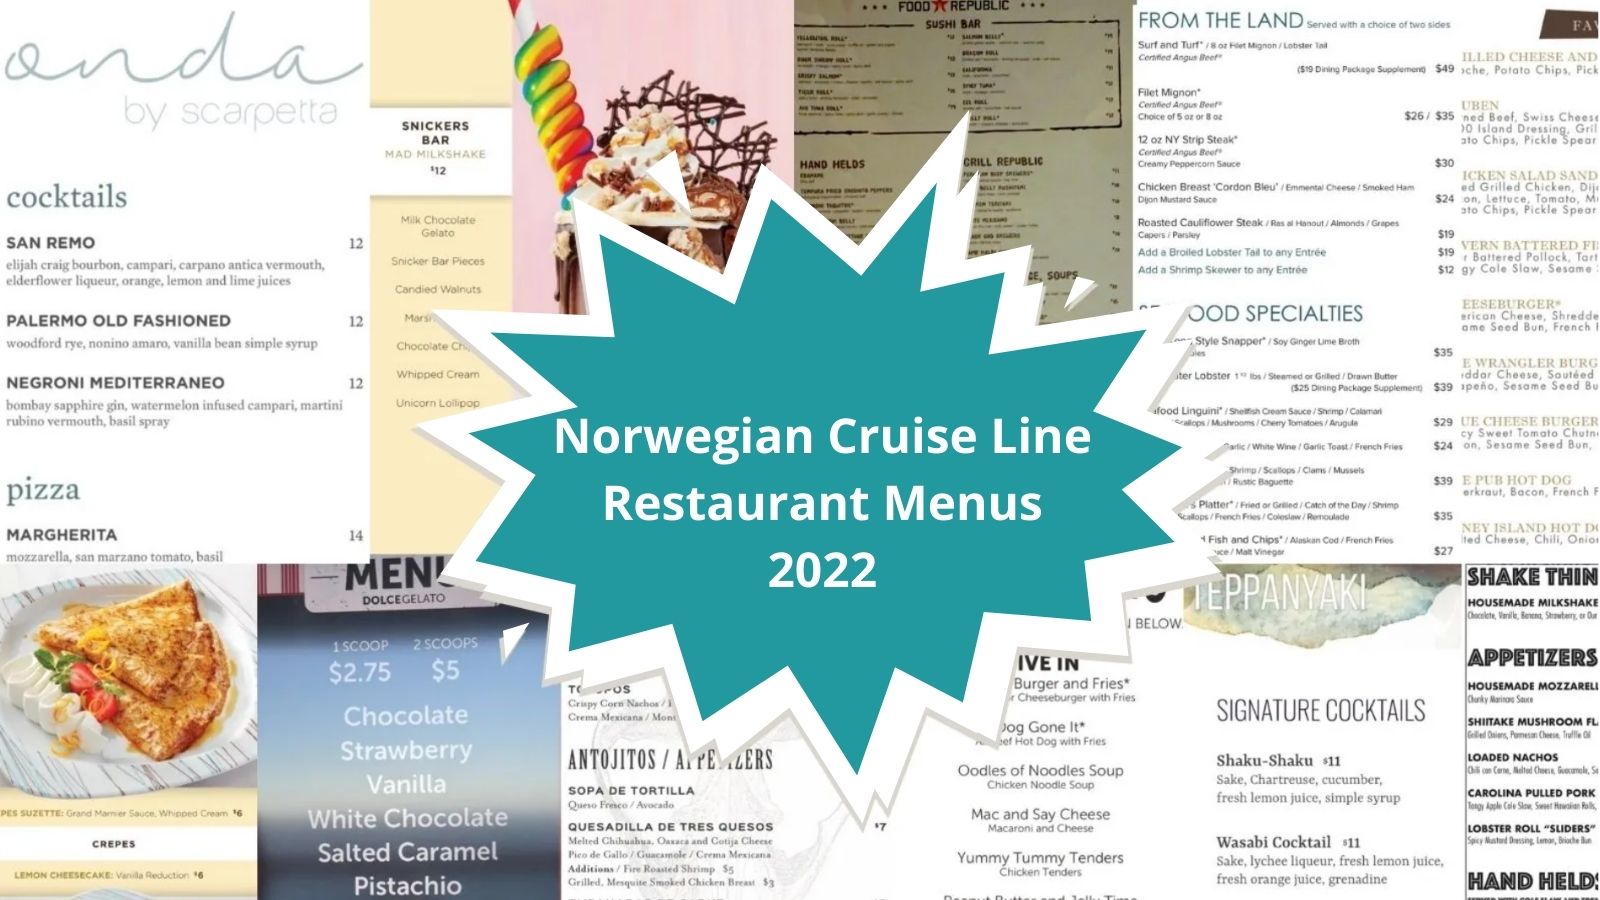 Norwegian Cruise Line Restaurant Menus 2022 